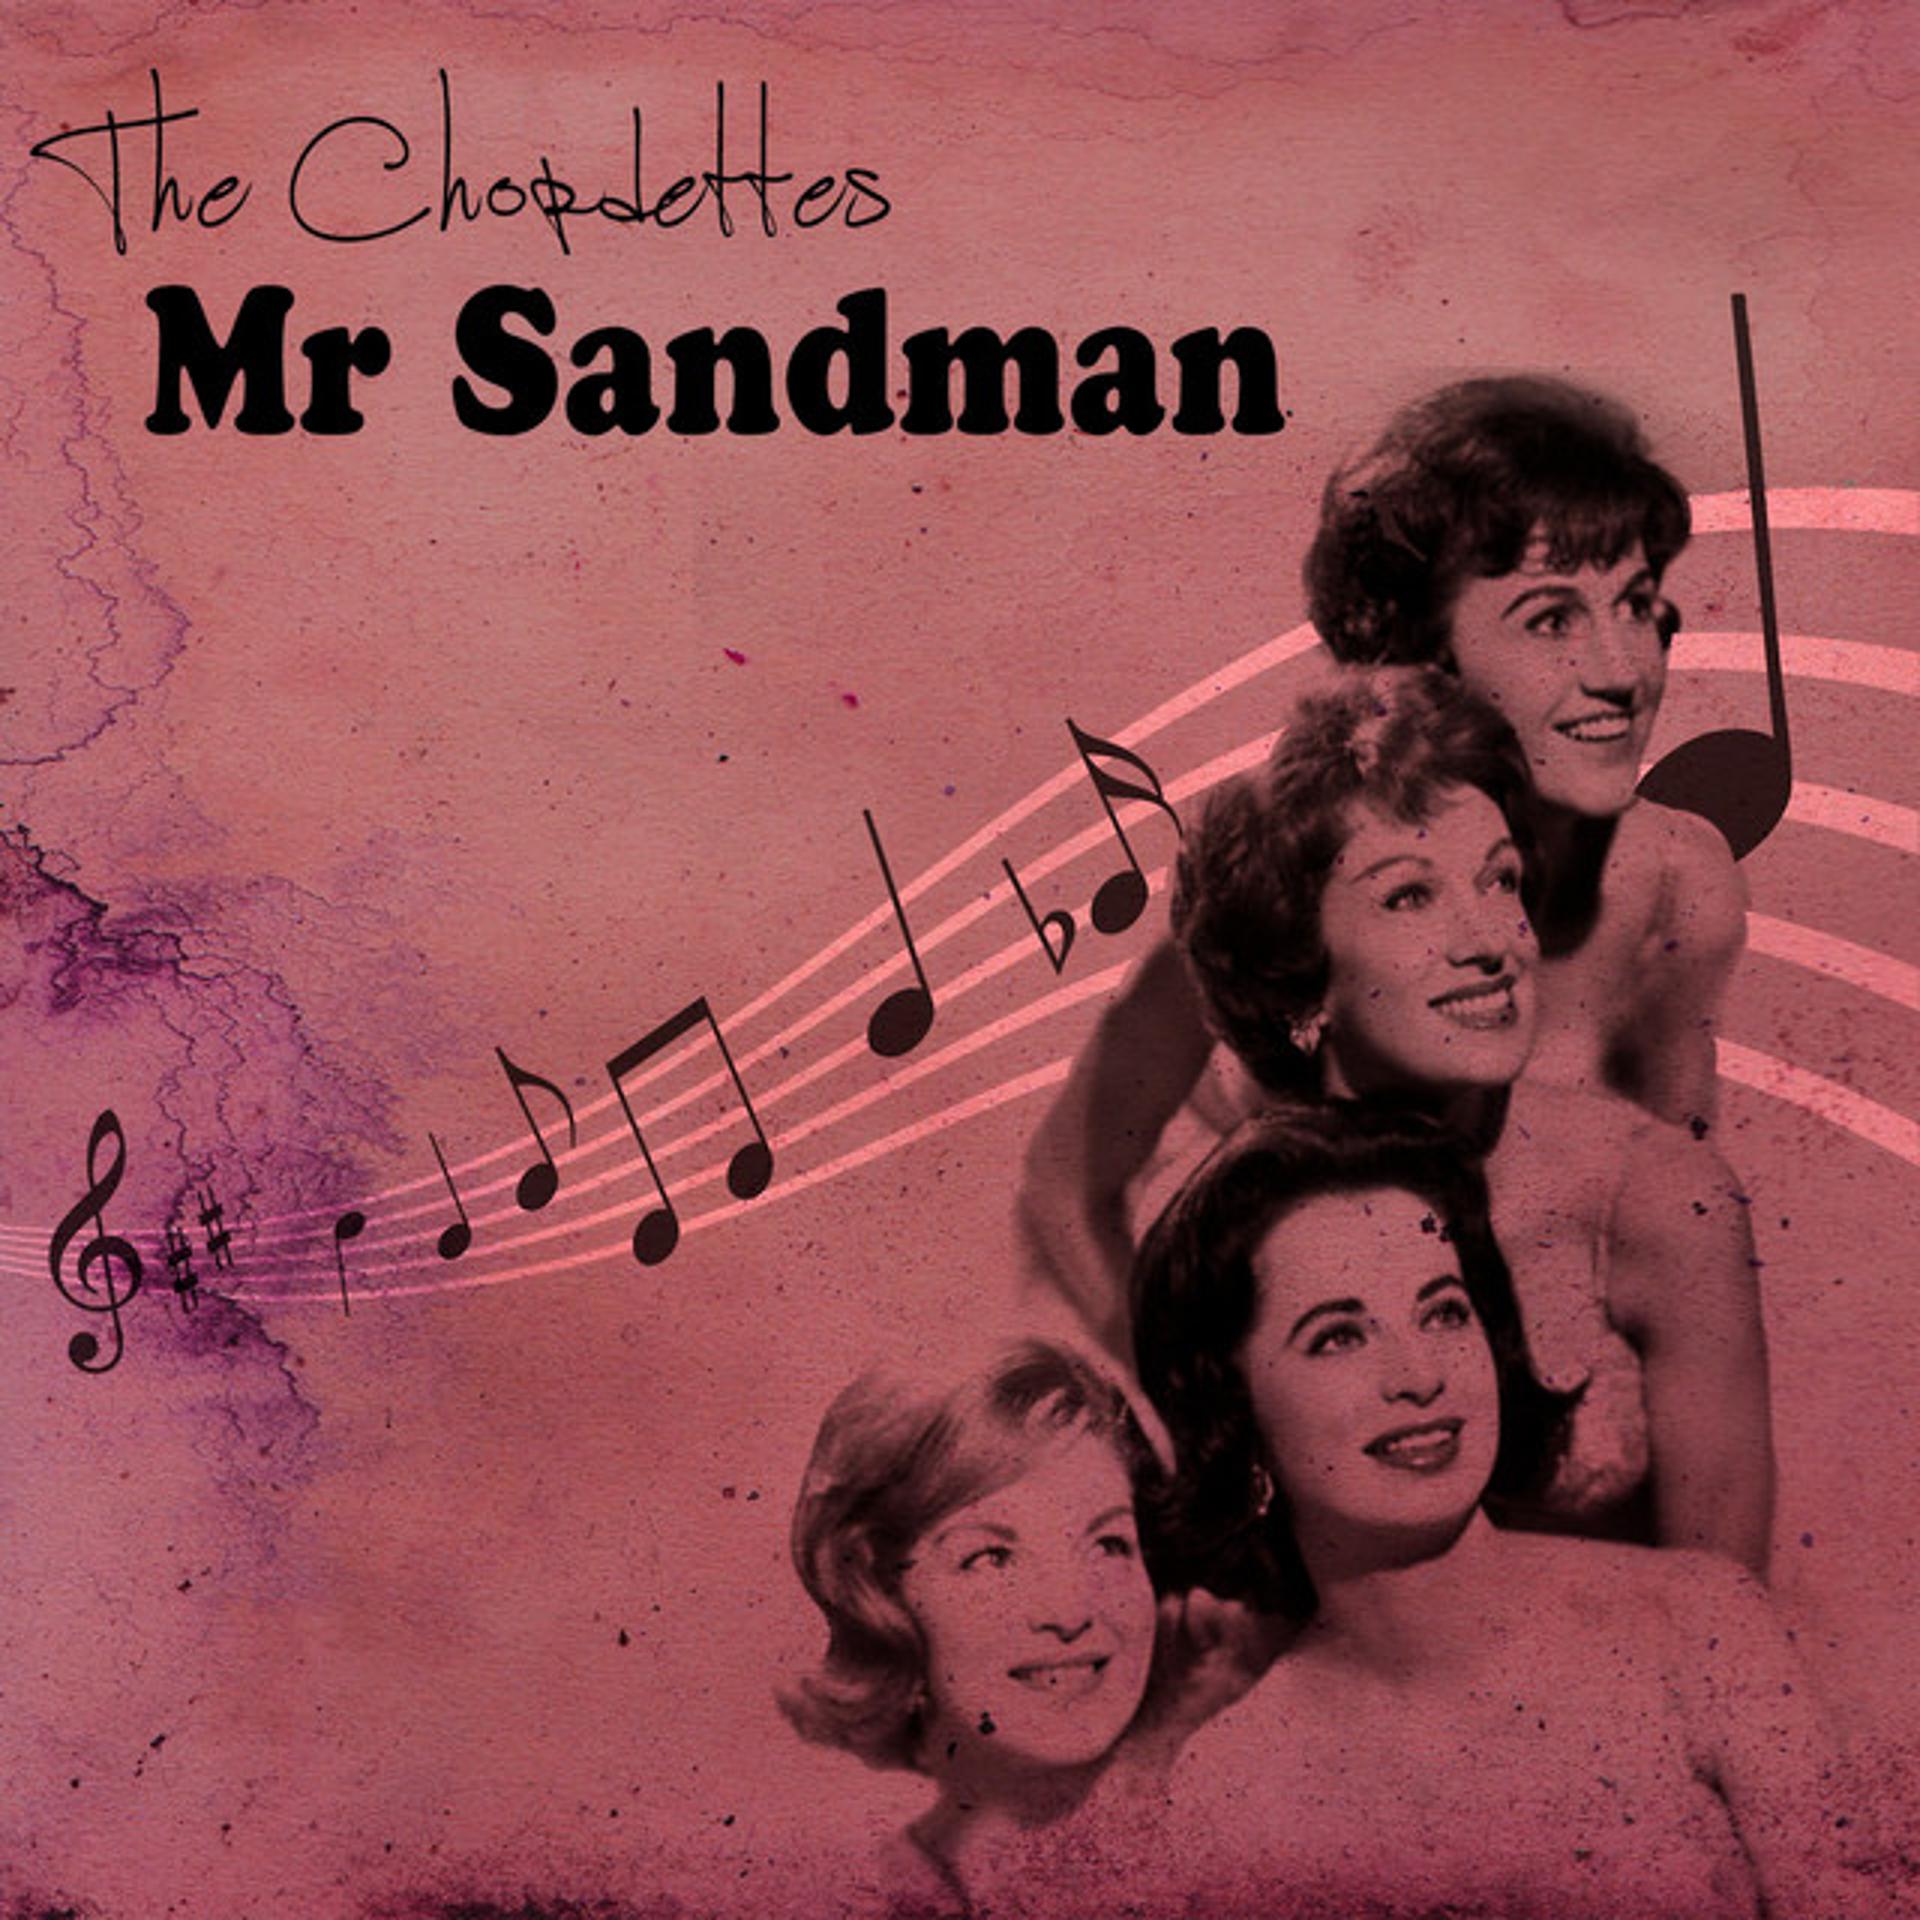 Mister sandman. Mister Sandman the Chordettes. Группа the Chordettes. Mr Sandman песня. Мистер Сэндмэн песня.